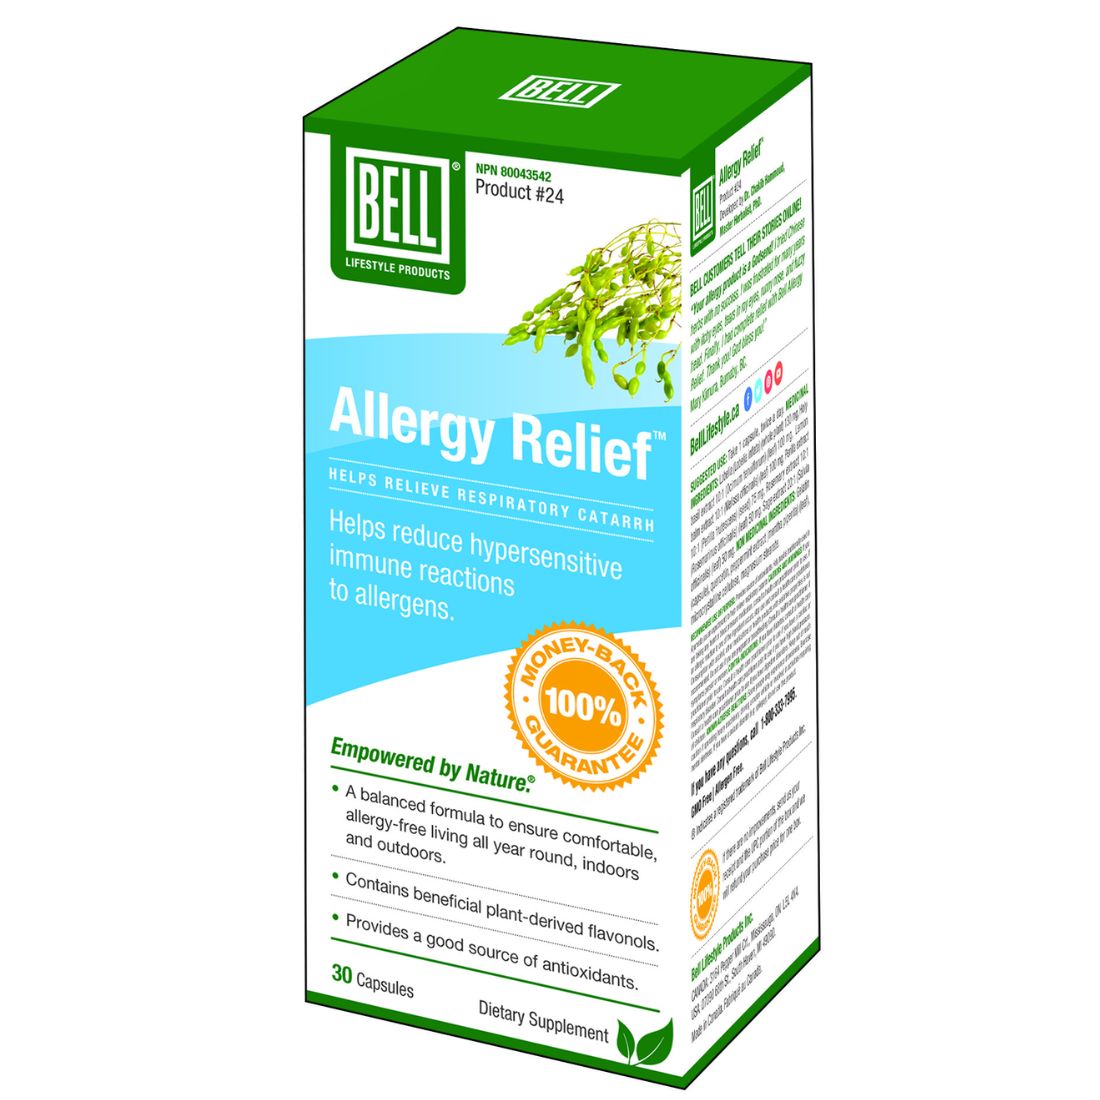 Bell Allergy Relief #24, 30 Capsules